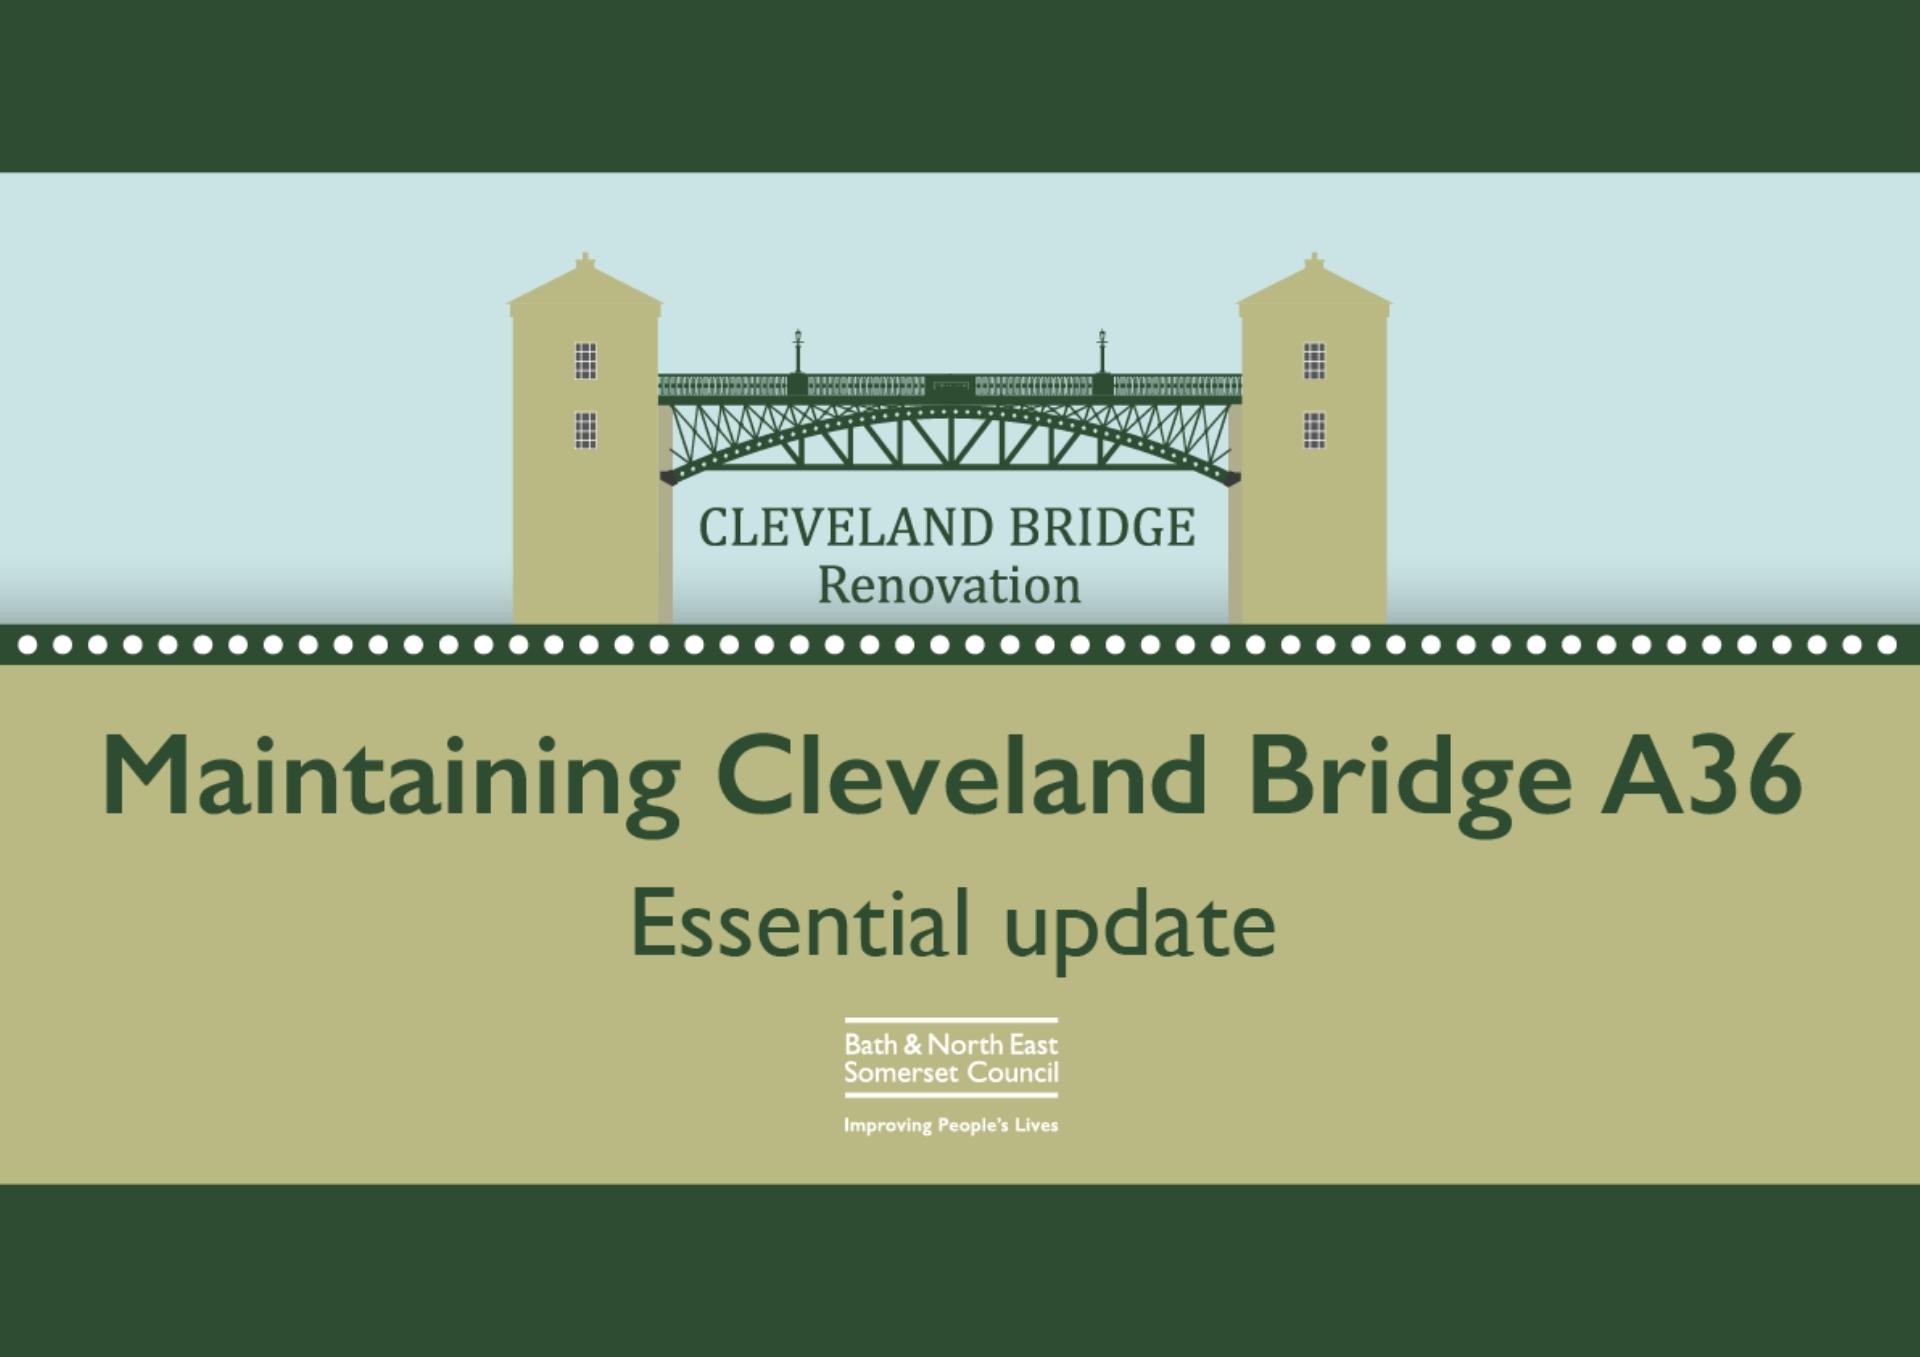 Cleveland bridge project update